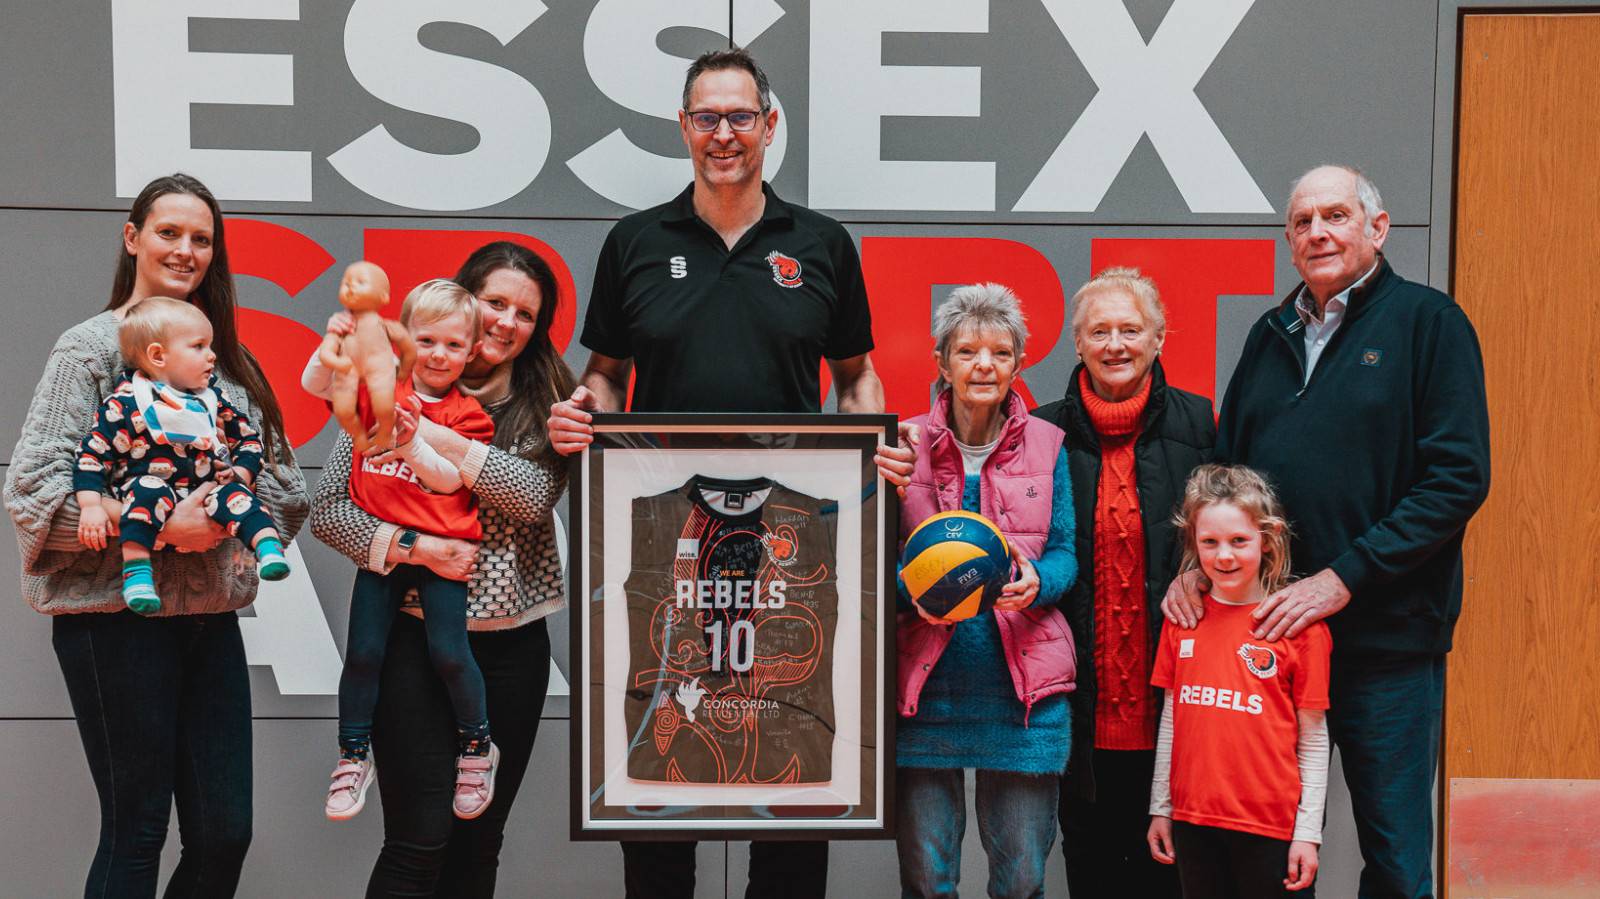 Alex Porter celebrates 10 years at Essex